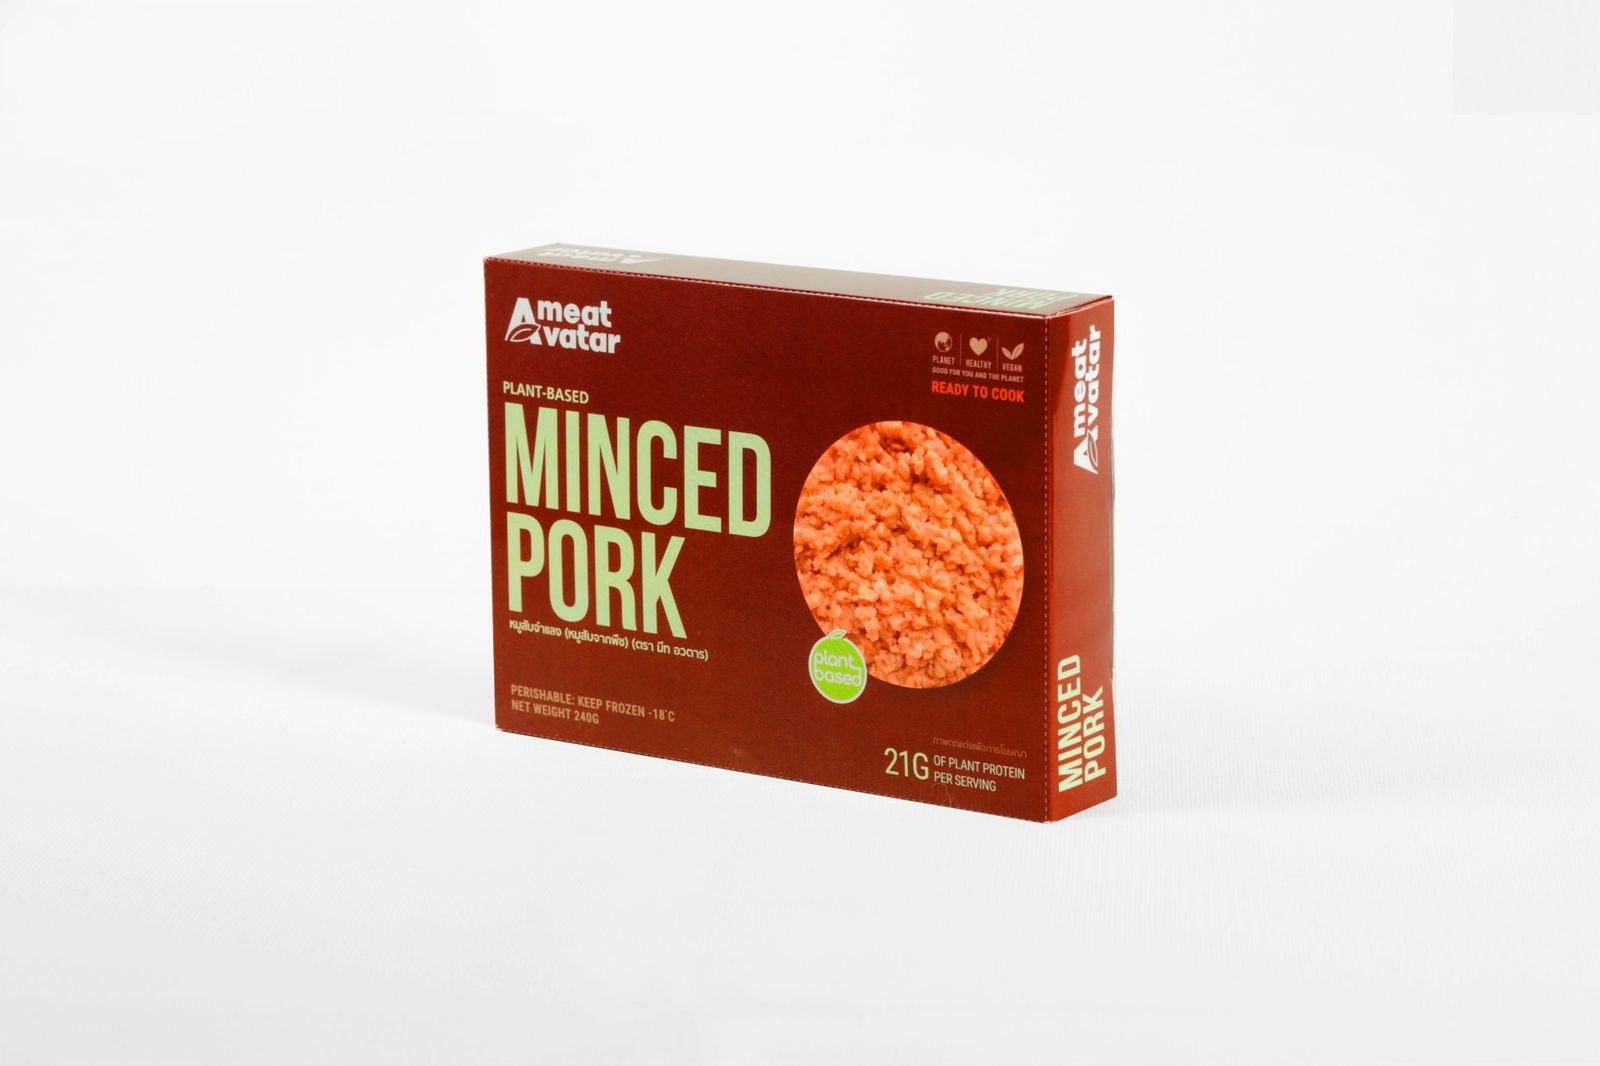 Minced Pork - Heo xay thịt chay